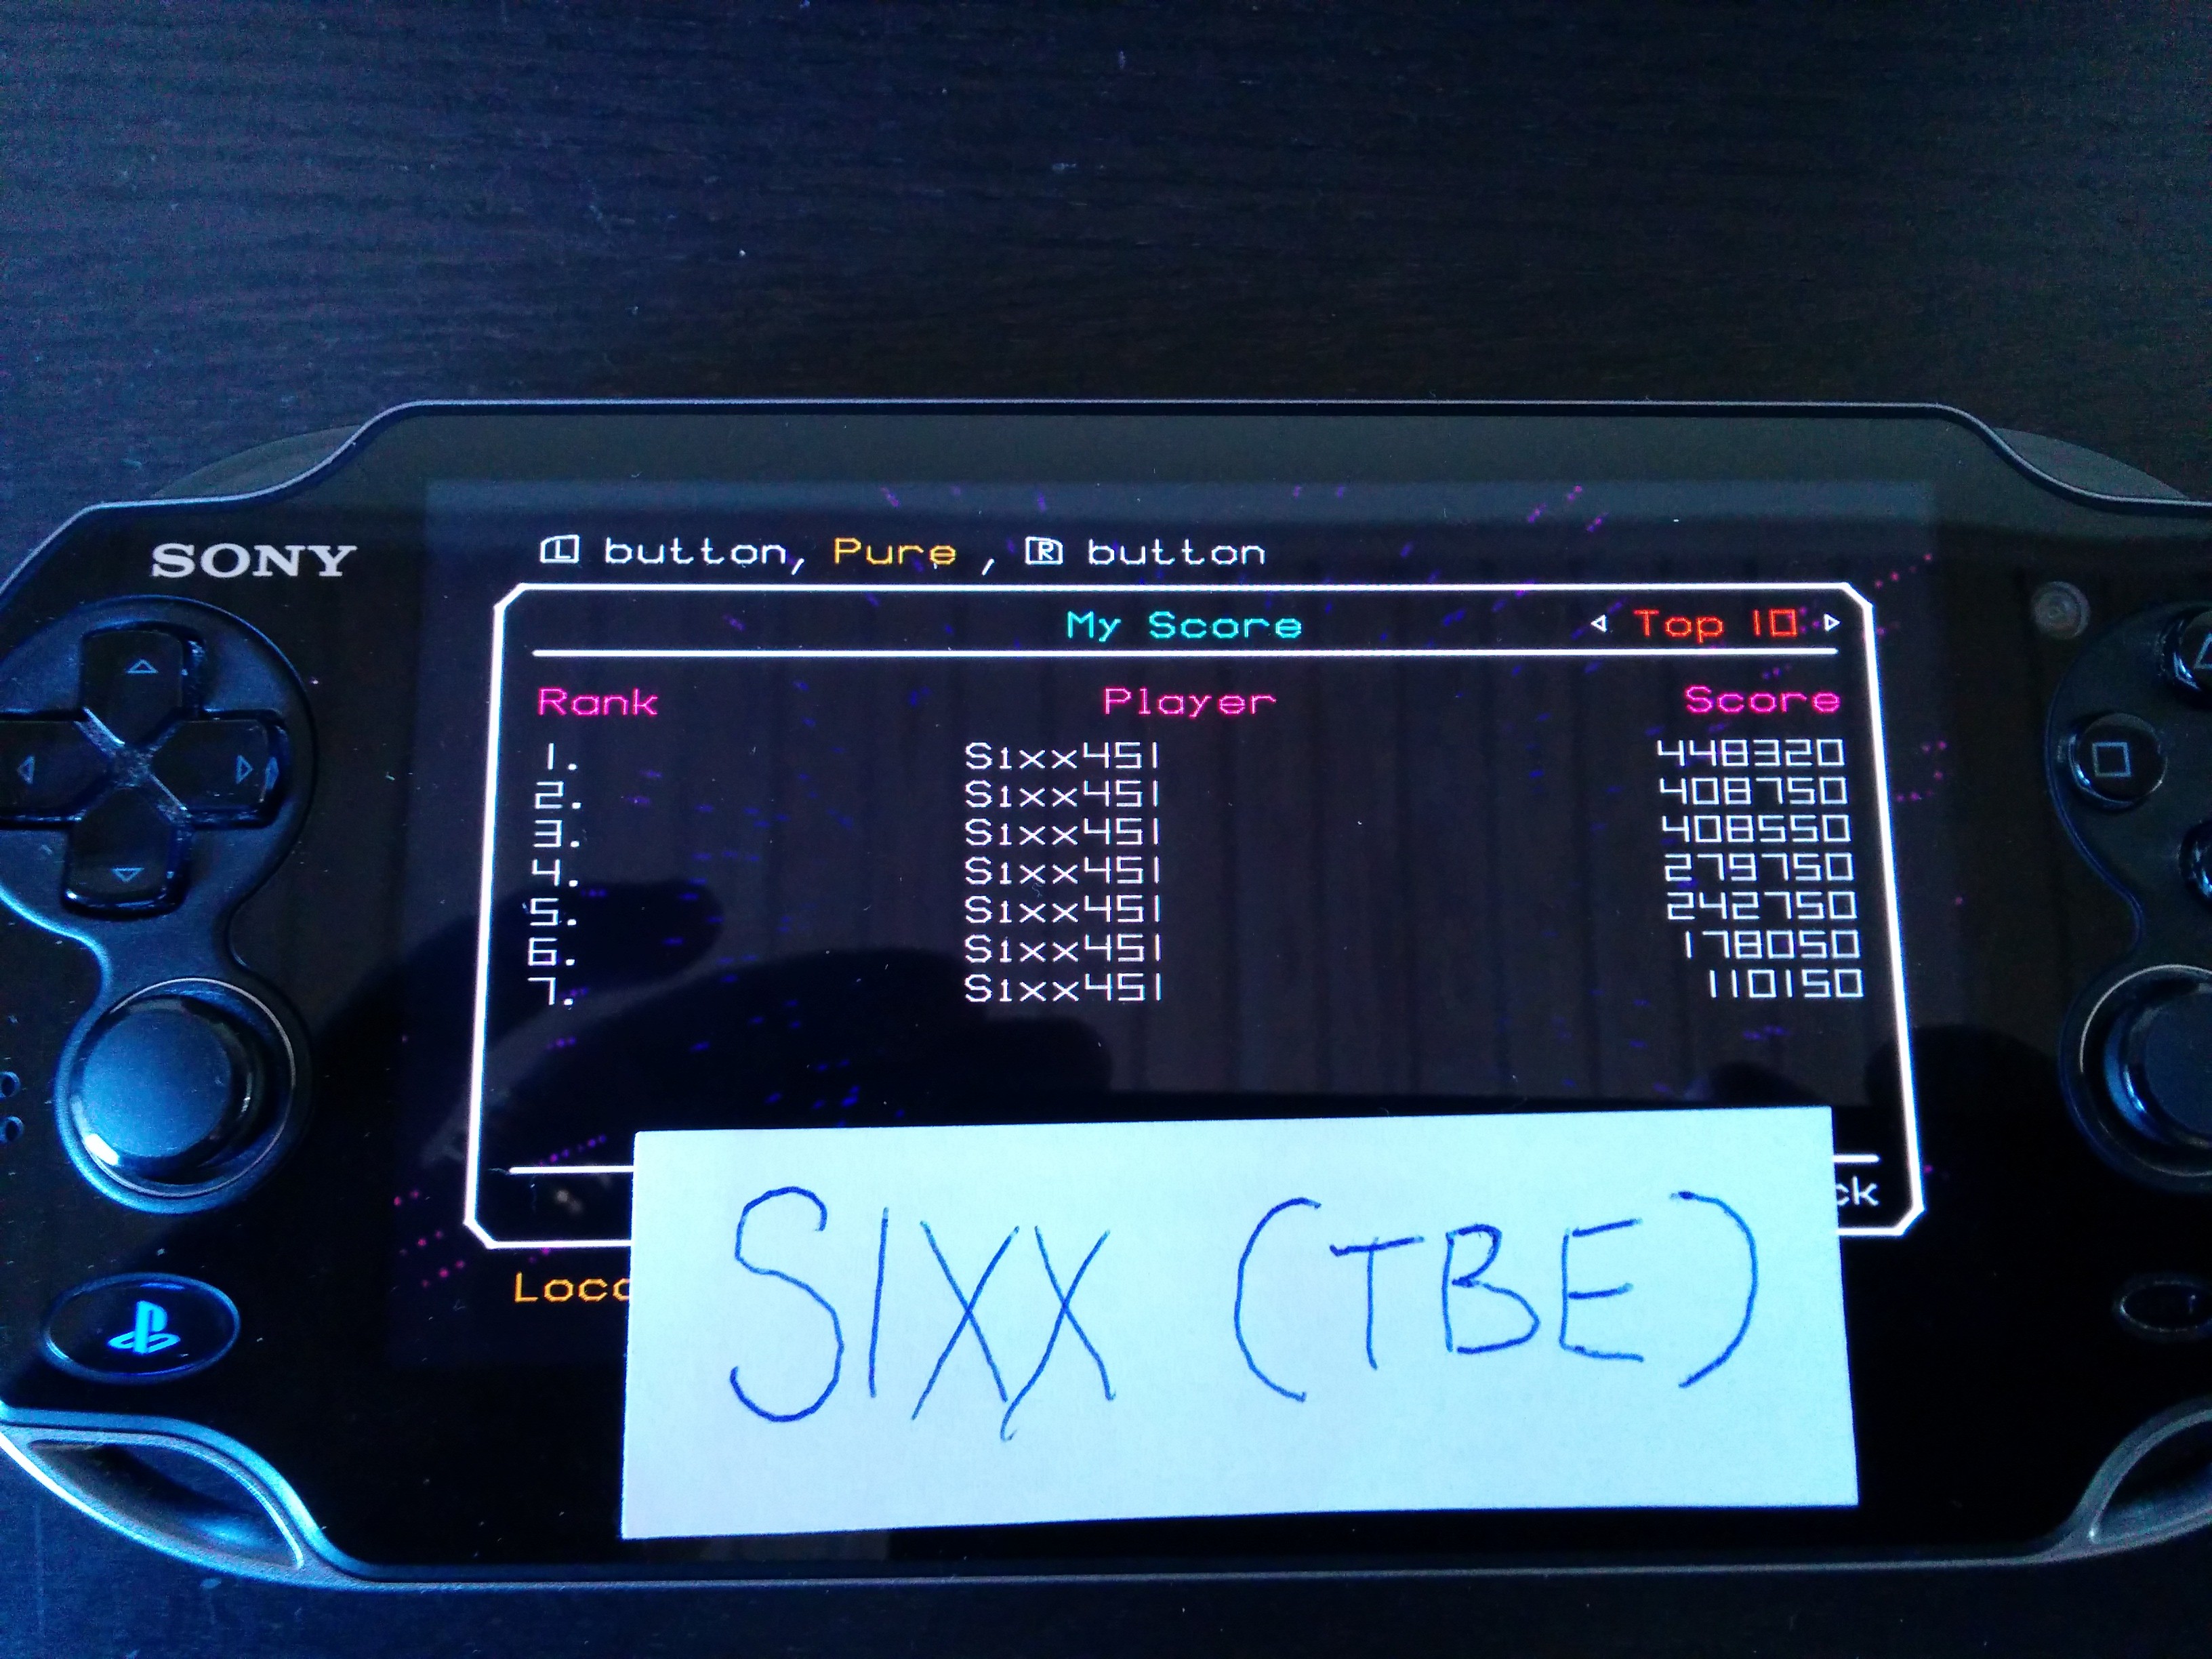 Sixx: TxK [Pure Mode] (PS Vita) 448,320 points on 2014-04-04 07:55:36